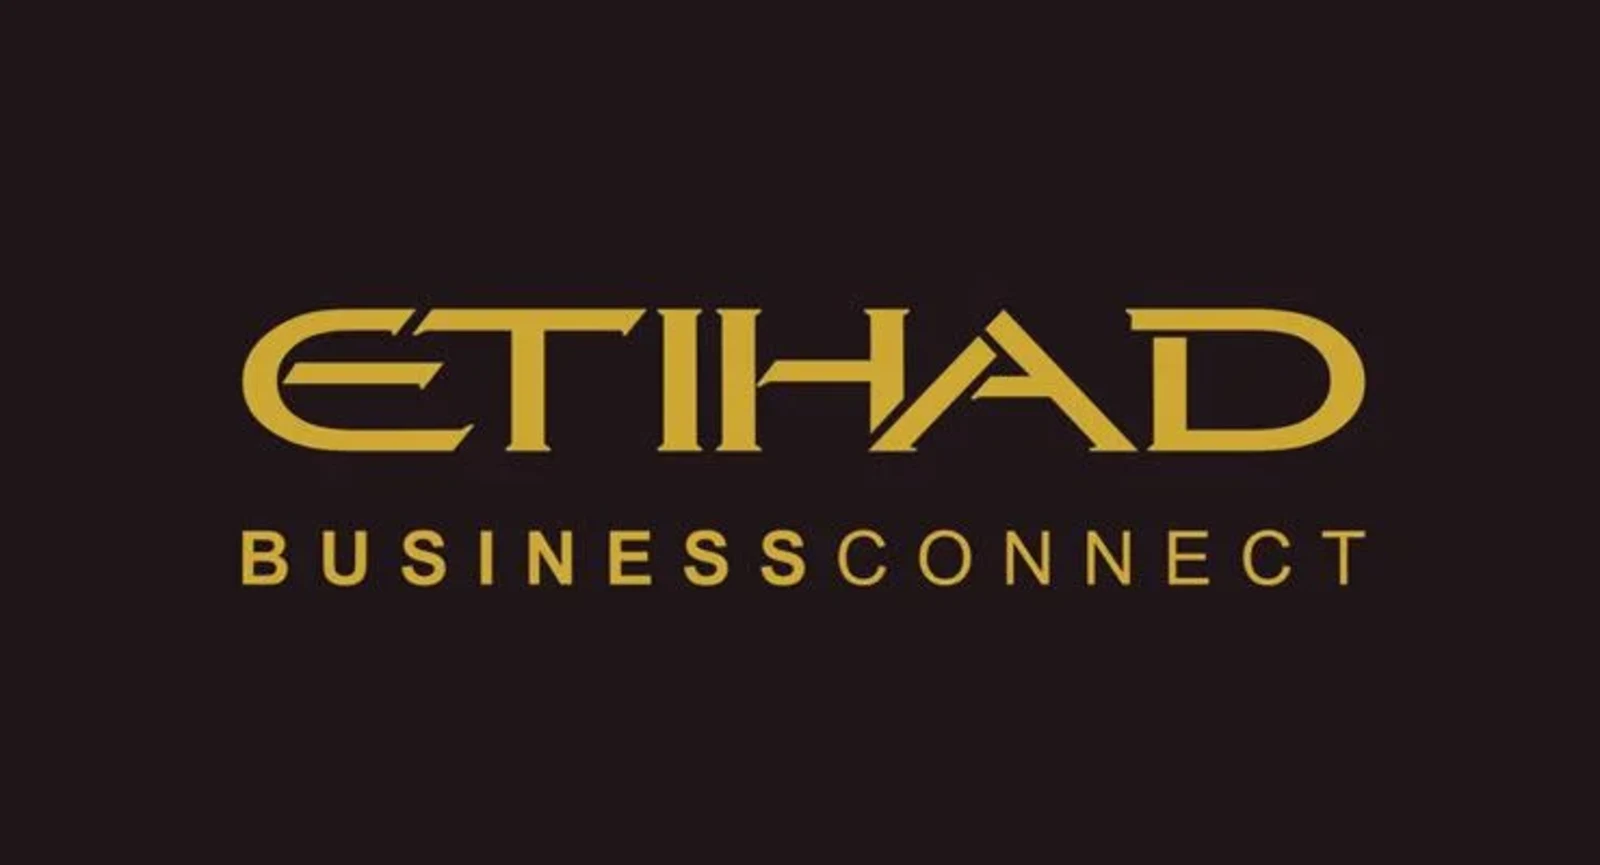 Etihad logo - business connect